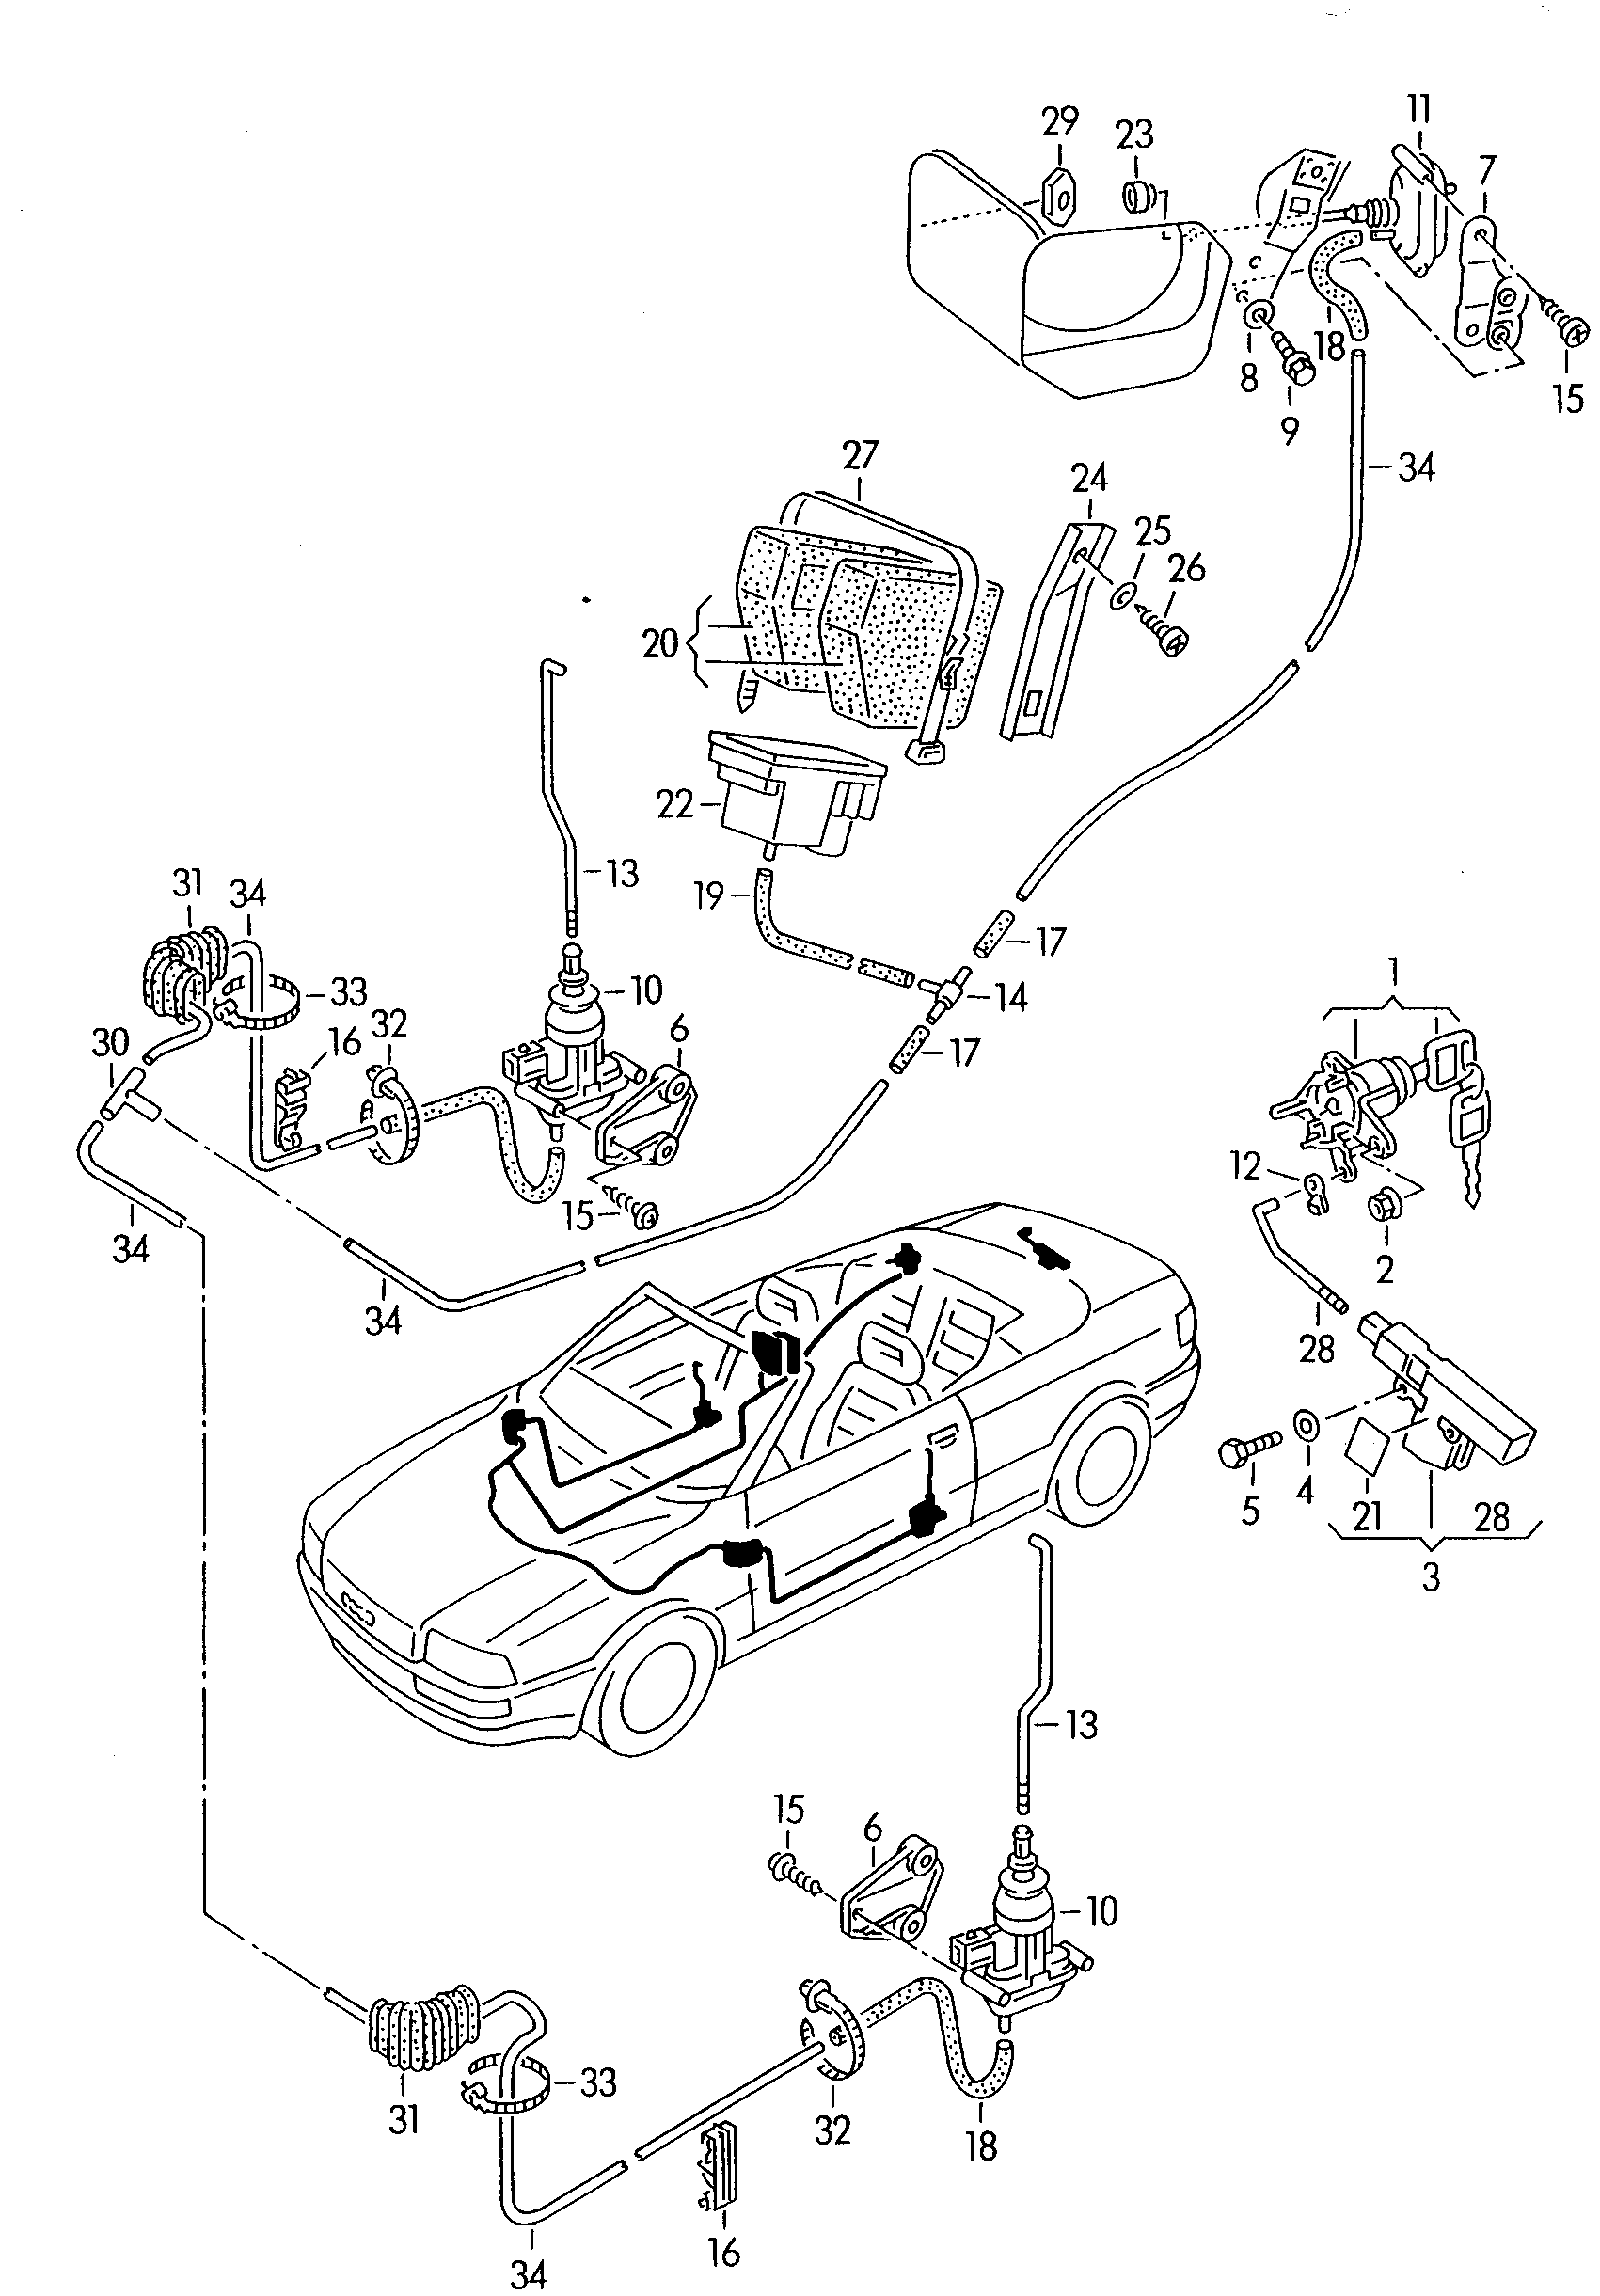 chiusura centralizzata - Audi Cabriolet(ACA)  